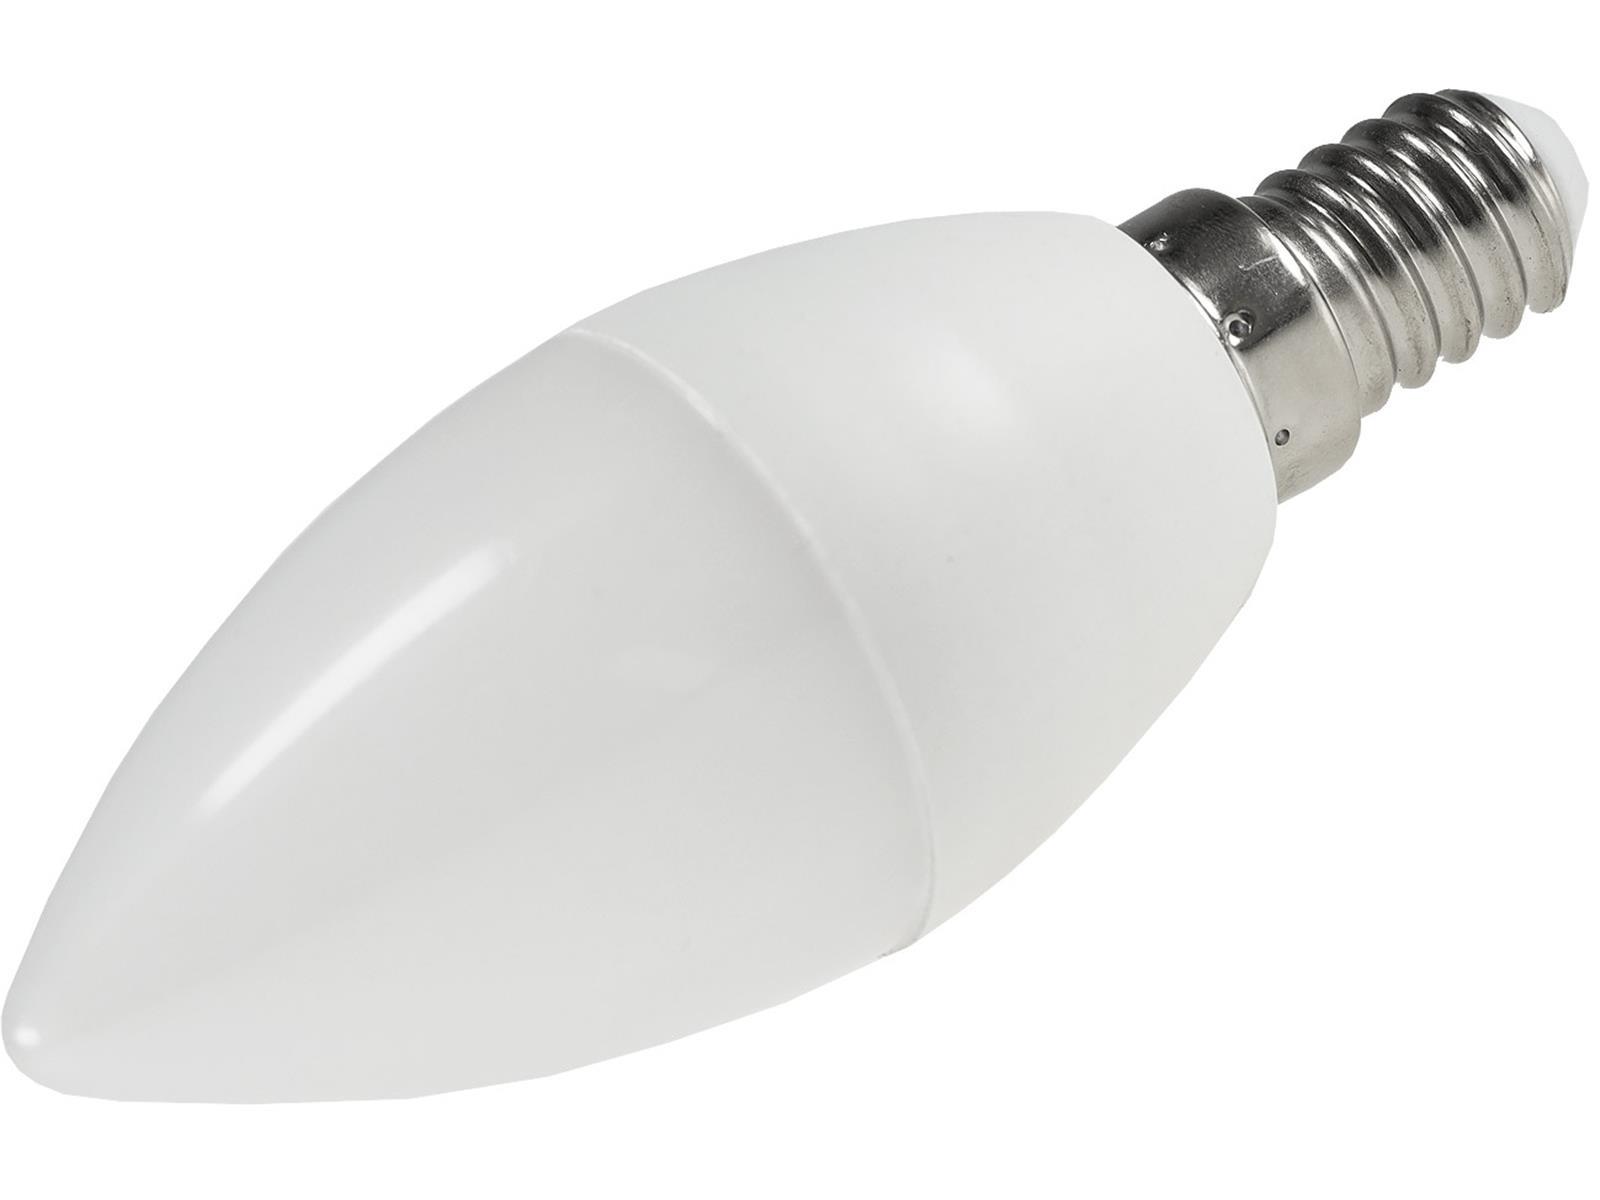 LED Kerzenlampe E14 "RA95" 2900k, 480lm, 230V/6W, 160°, warmweiß